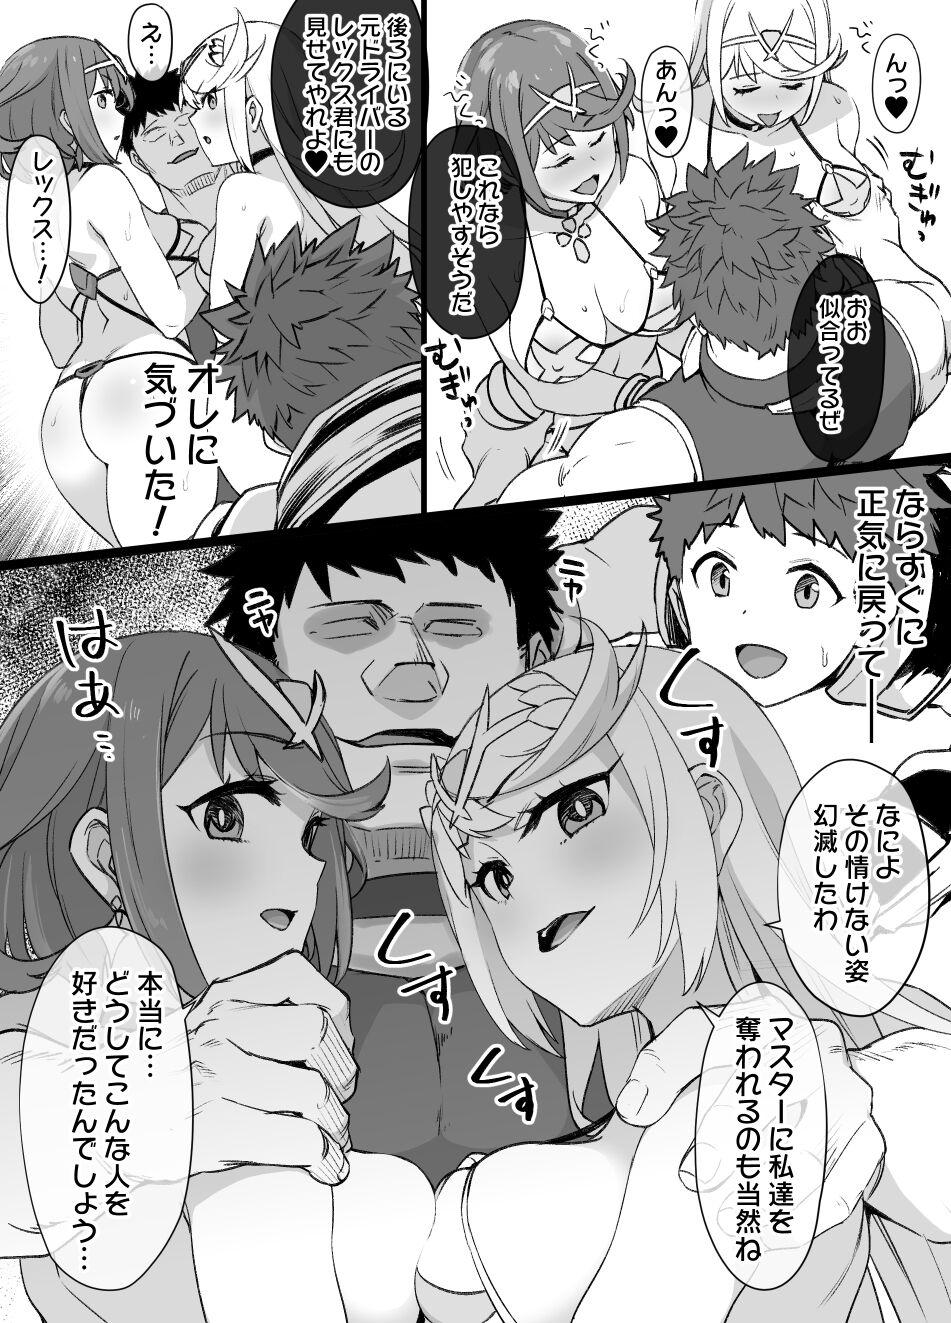 Collar Homura & Hikari Sennou NTR Manga 14P - Xenoblade chronicles 2 Free Amateur - Page 5